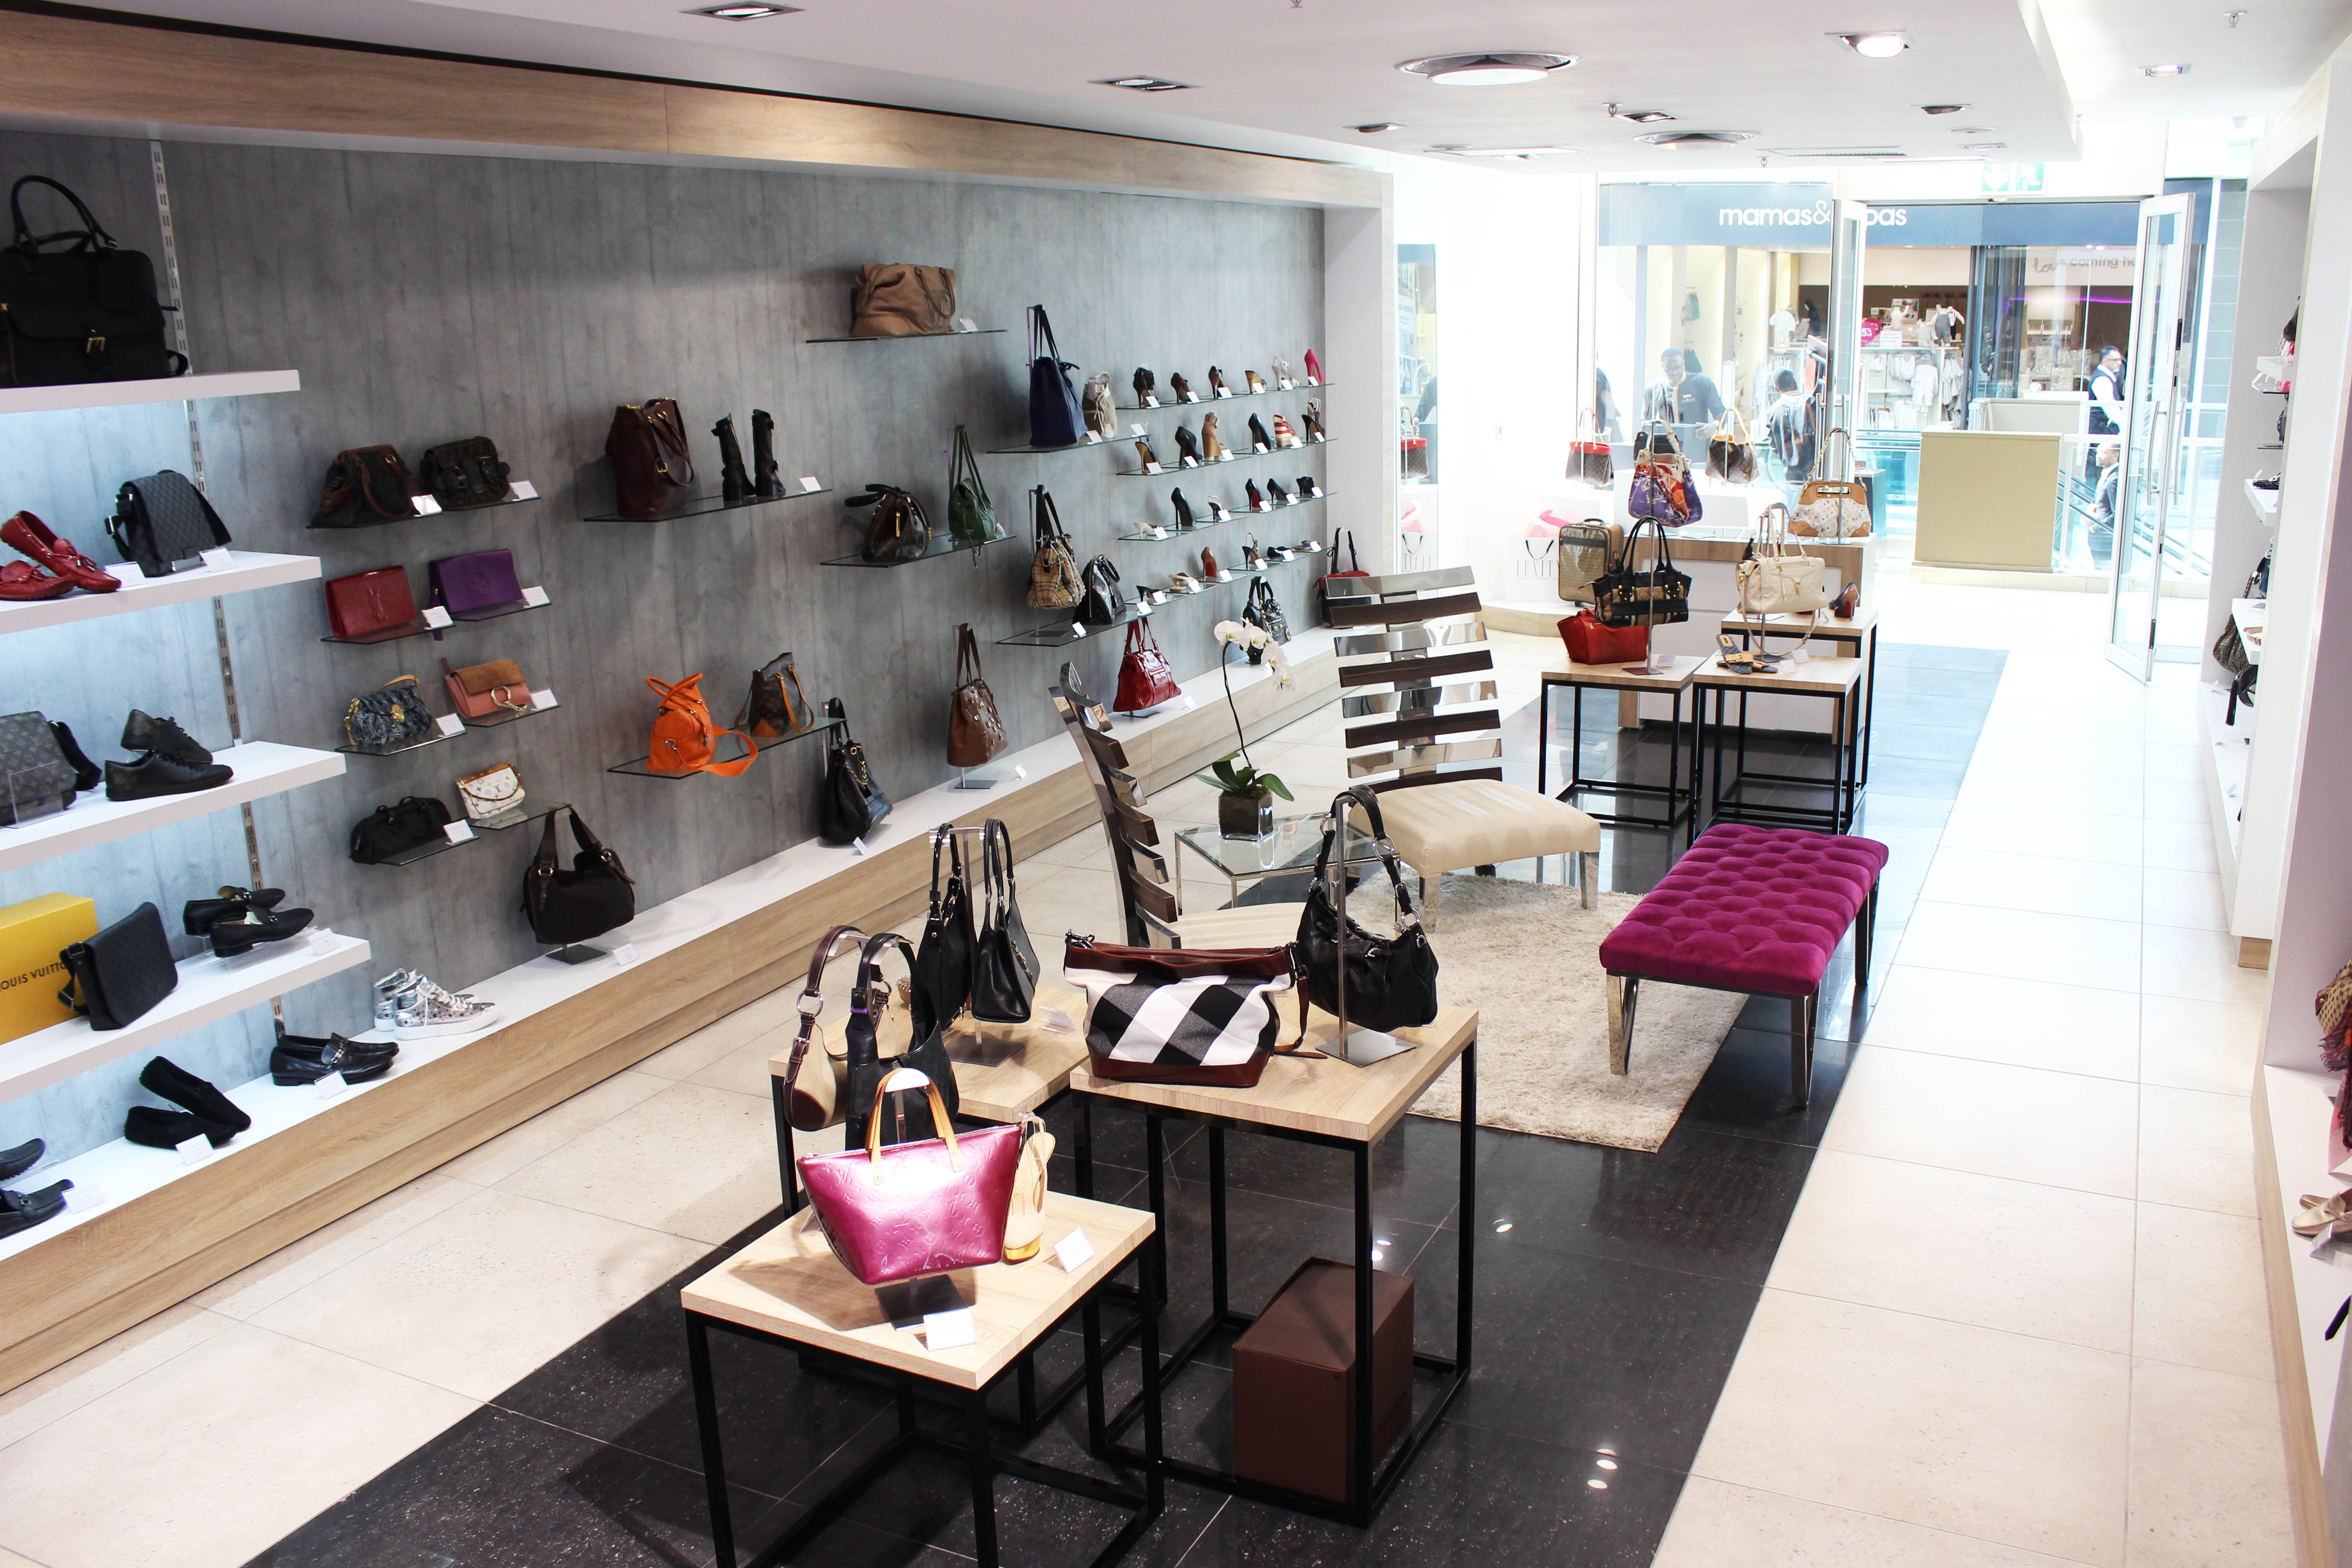 Prada - Prada opens its first store in Johannesburg, South